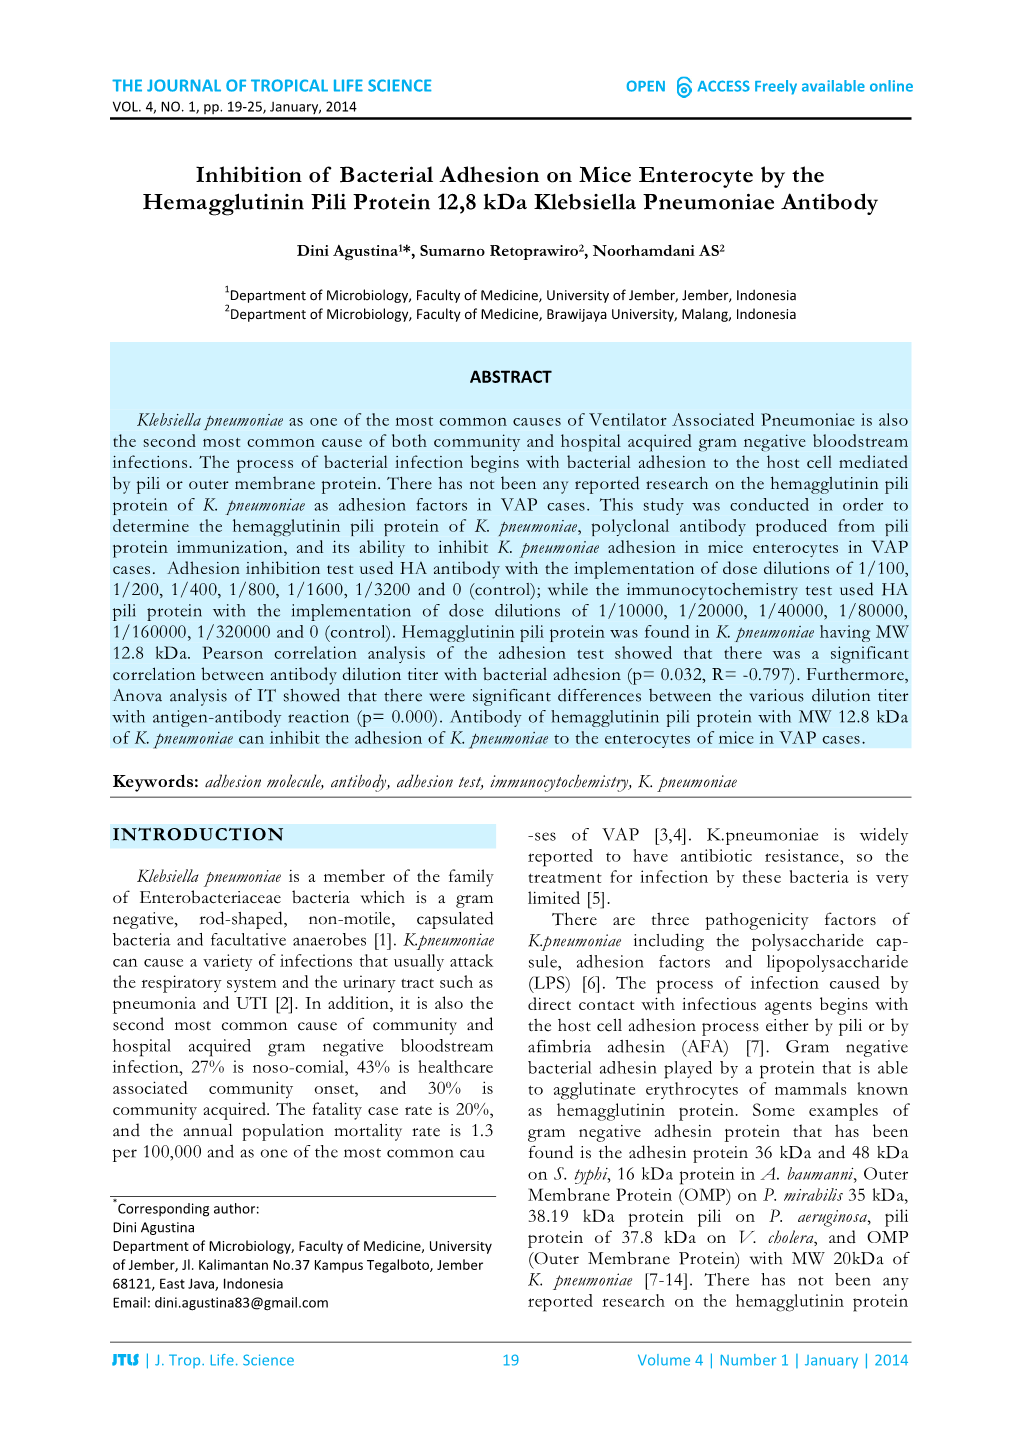 Inhibition of Bacterial Adhesion on Mice Enterocyte by the Hemagglutinin Pili Protein 12,8 Kda Klebsiella Pneumoniae Antibody